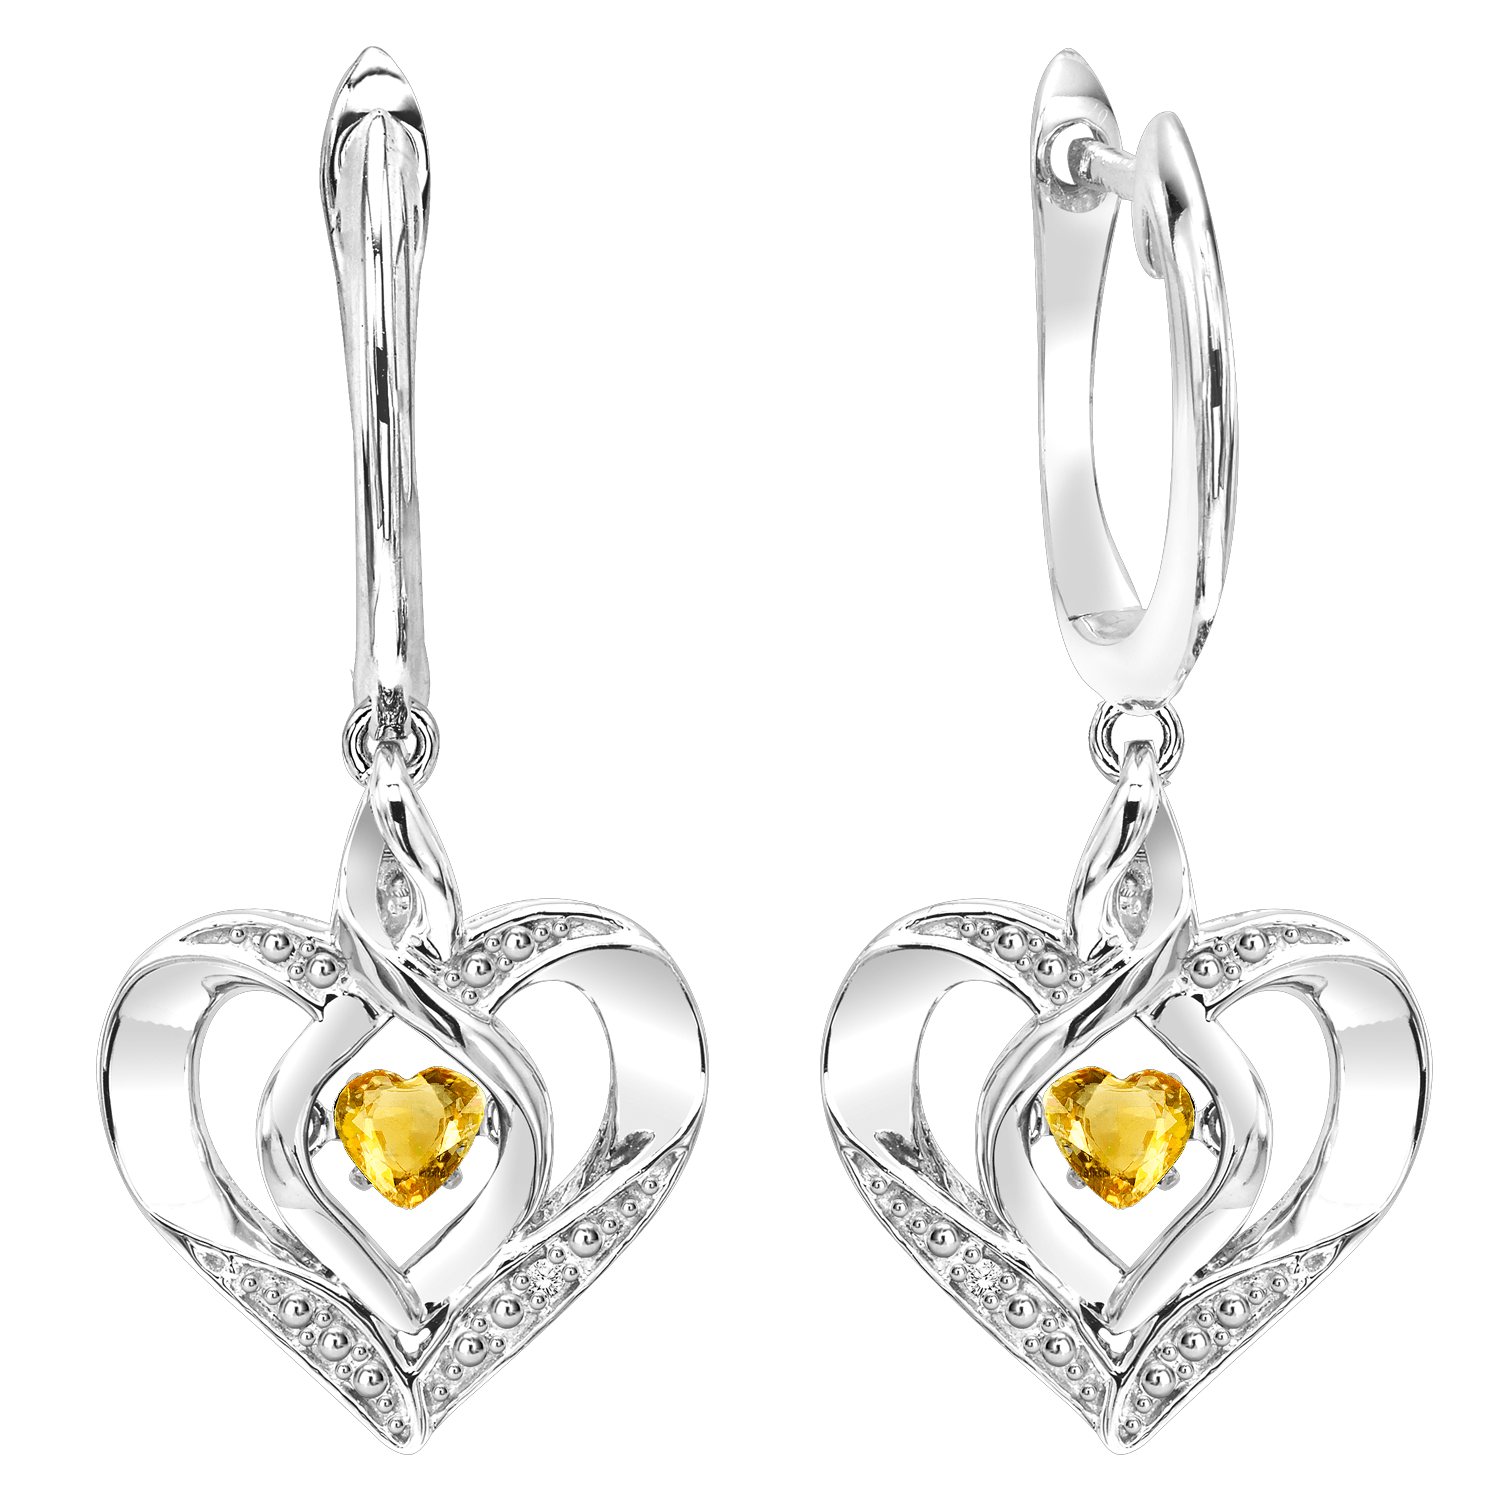 BW James Jewelers Earrings 16 Page Christmas Catalog Offer SS Diamond ROL-Birthst Heart Citrine Basics Earring